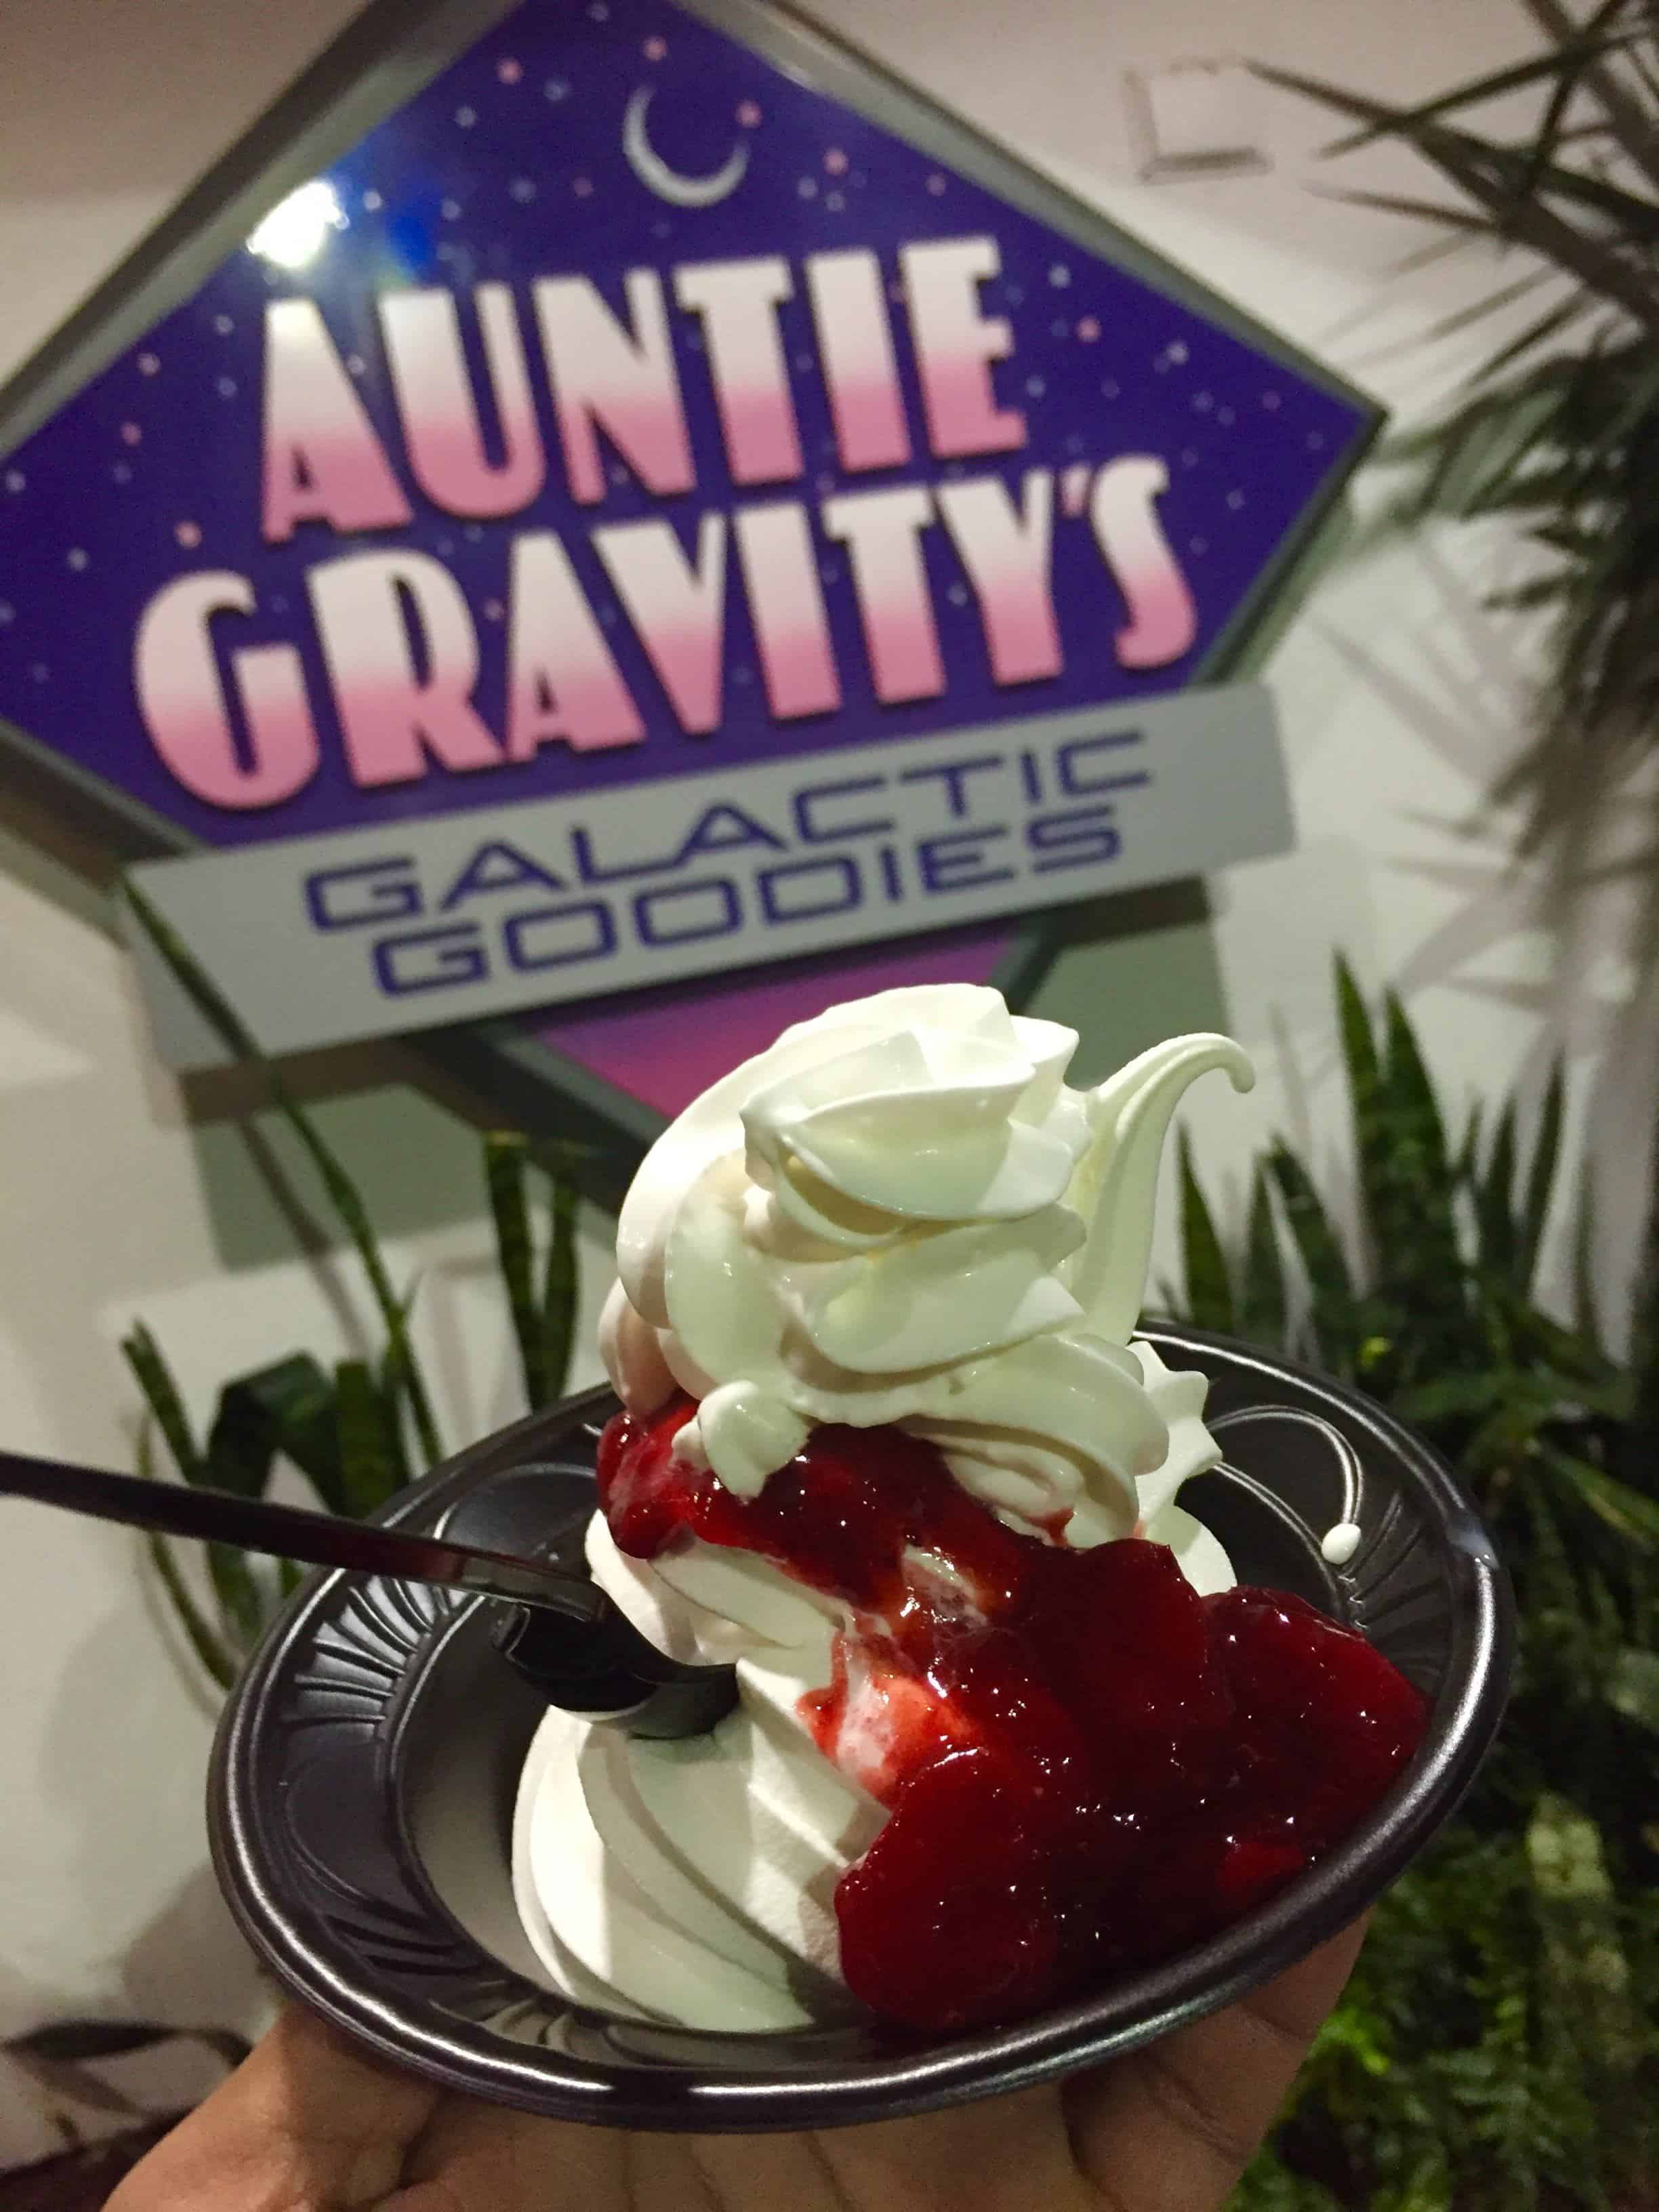 Strawberry Sundae from Auntie Gravity's Galactic Goodies